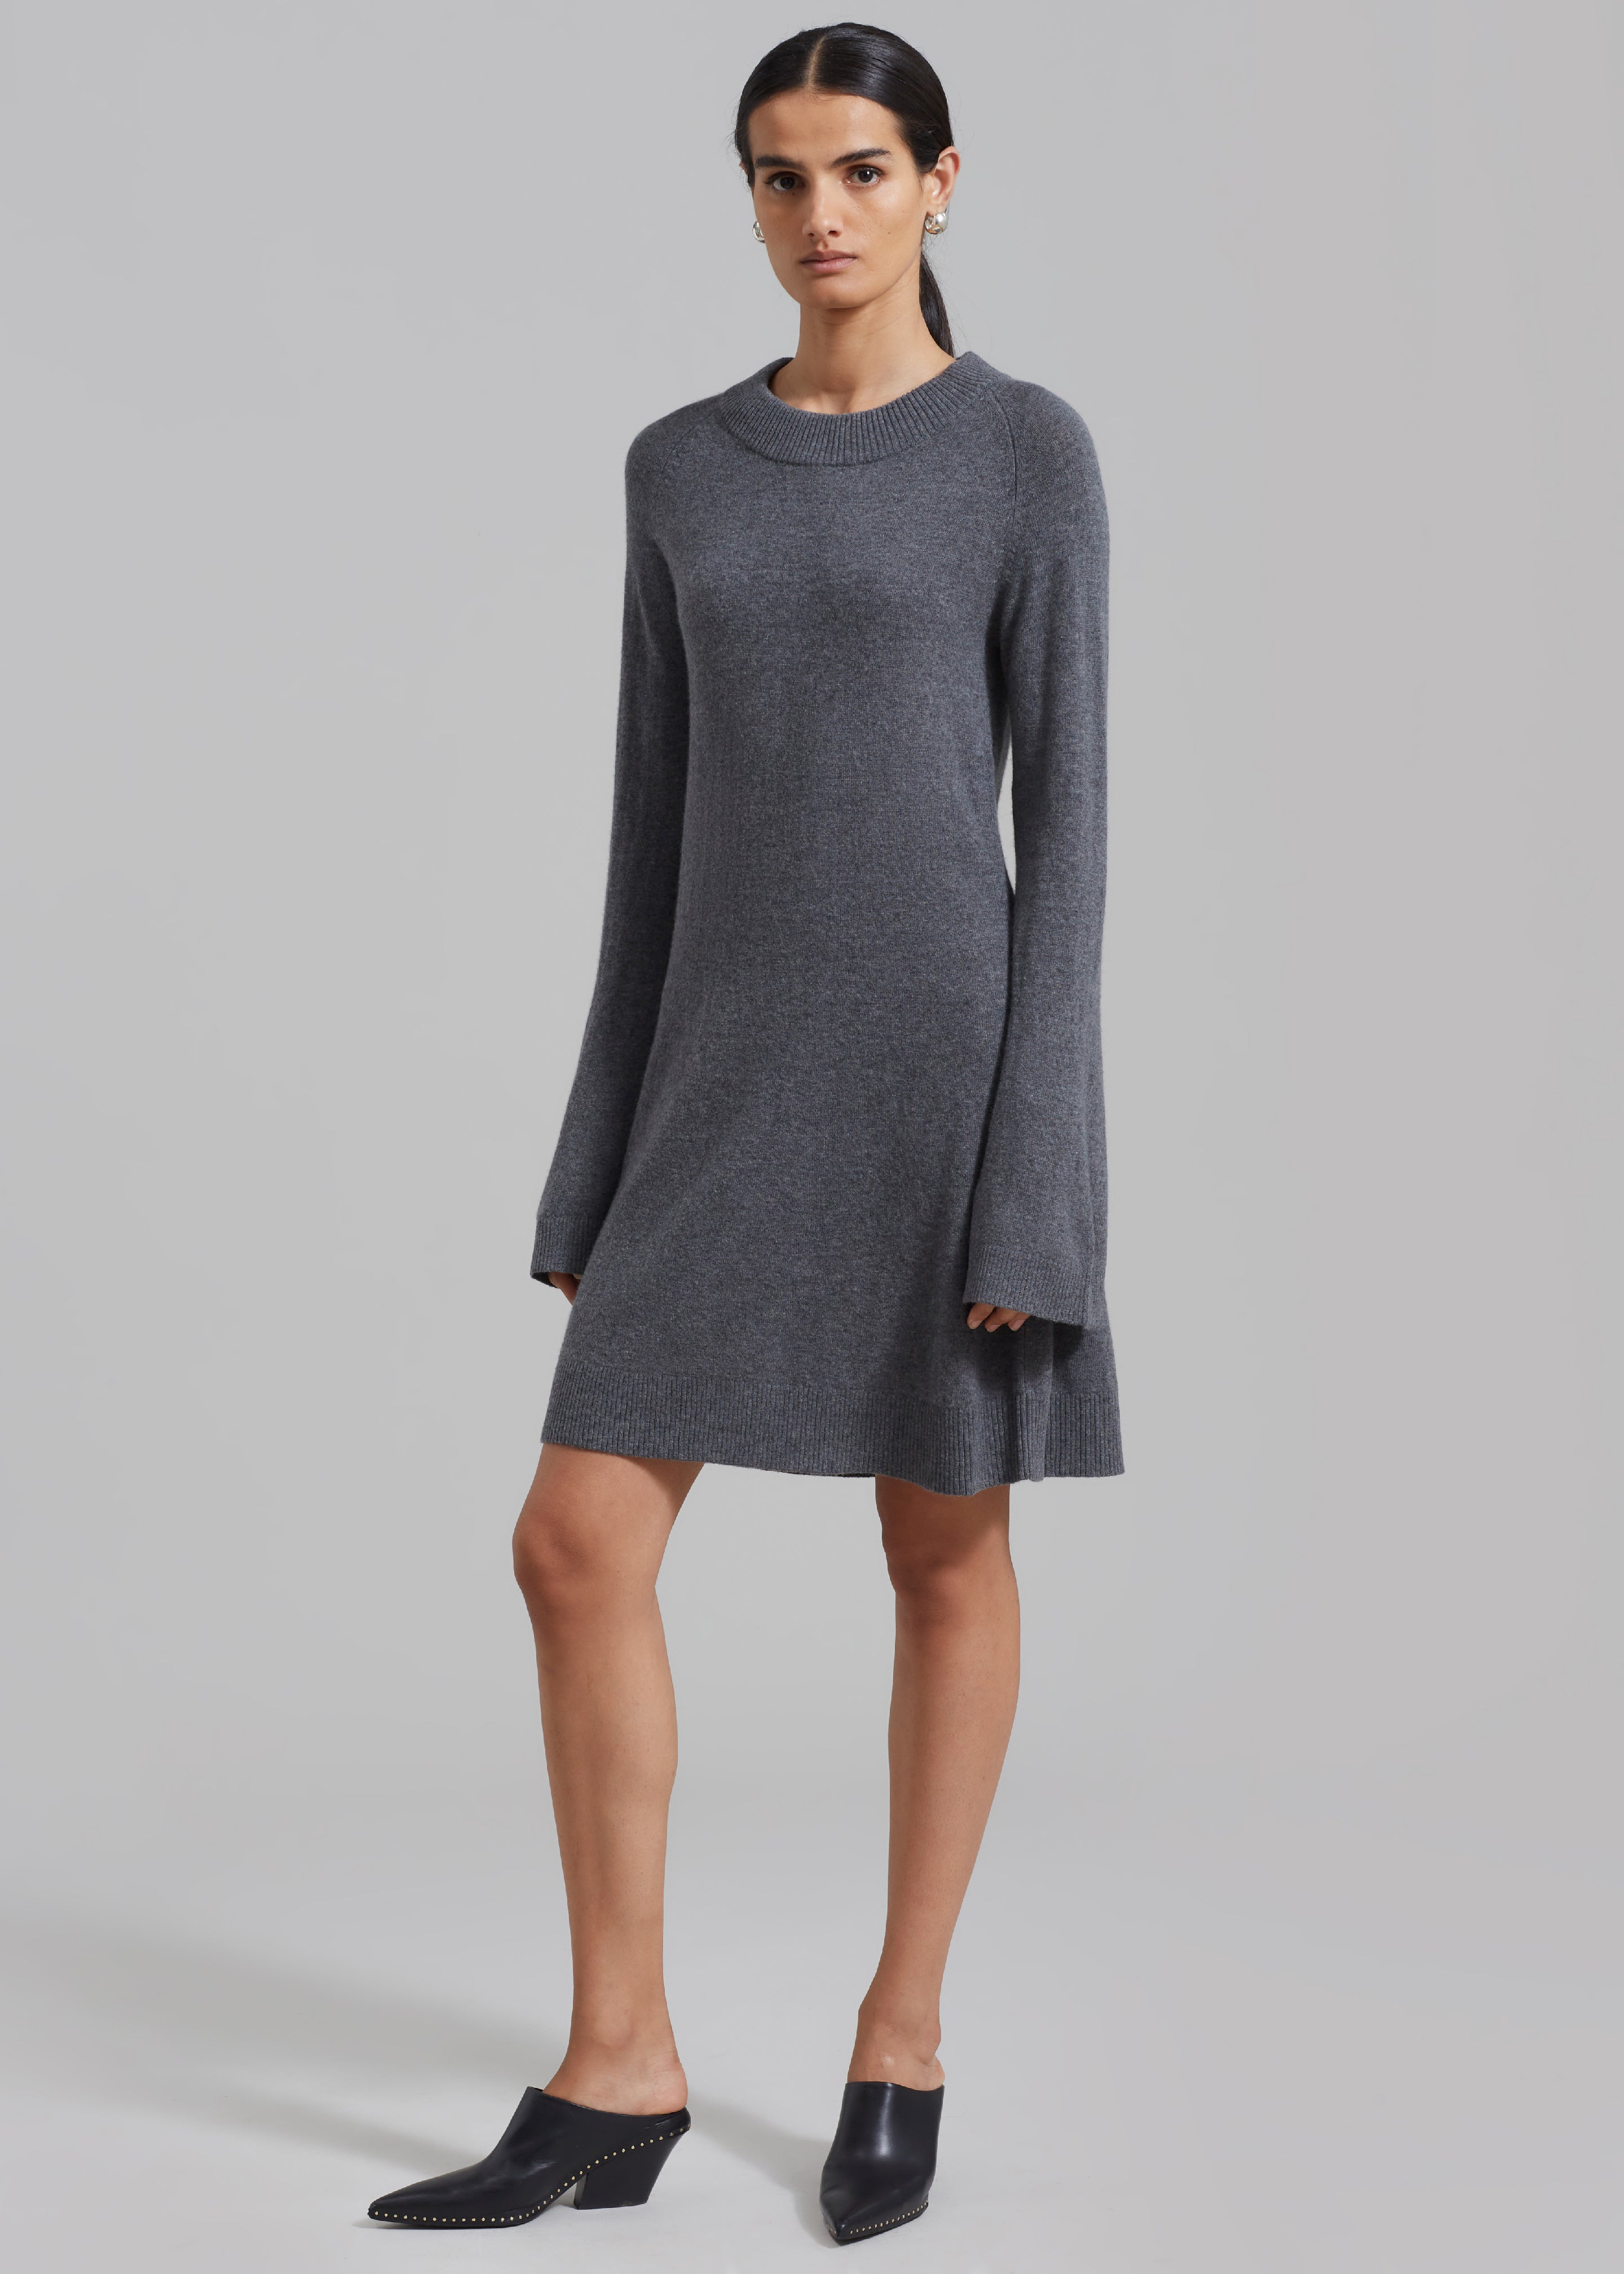 The Garment Como Raglan Dress - Grey Melange - 2